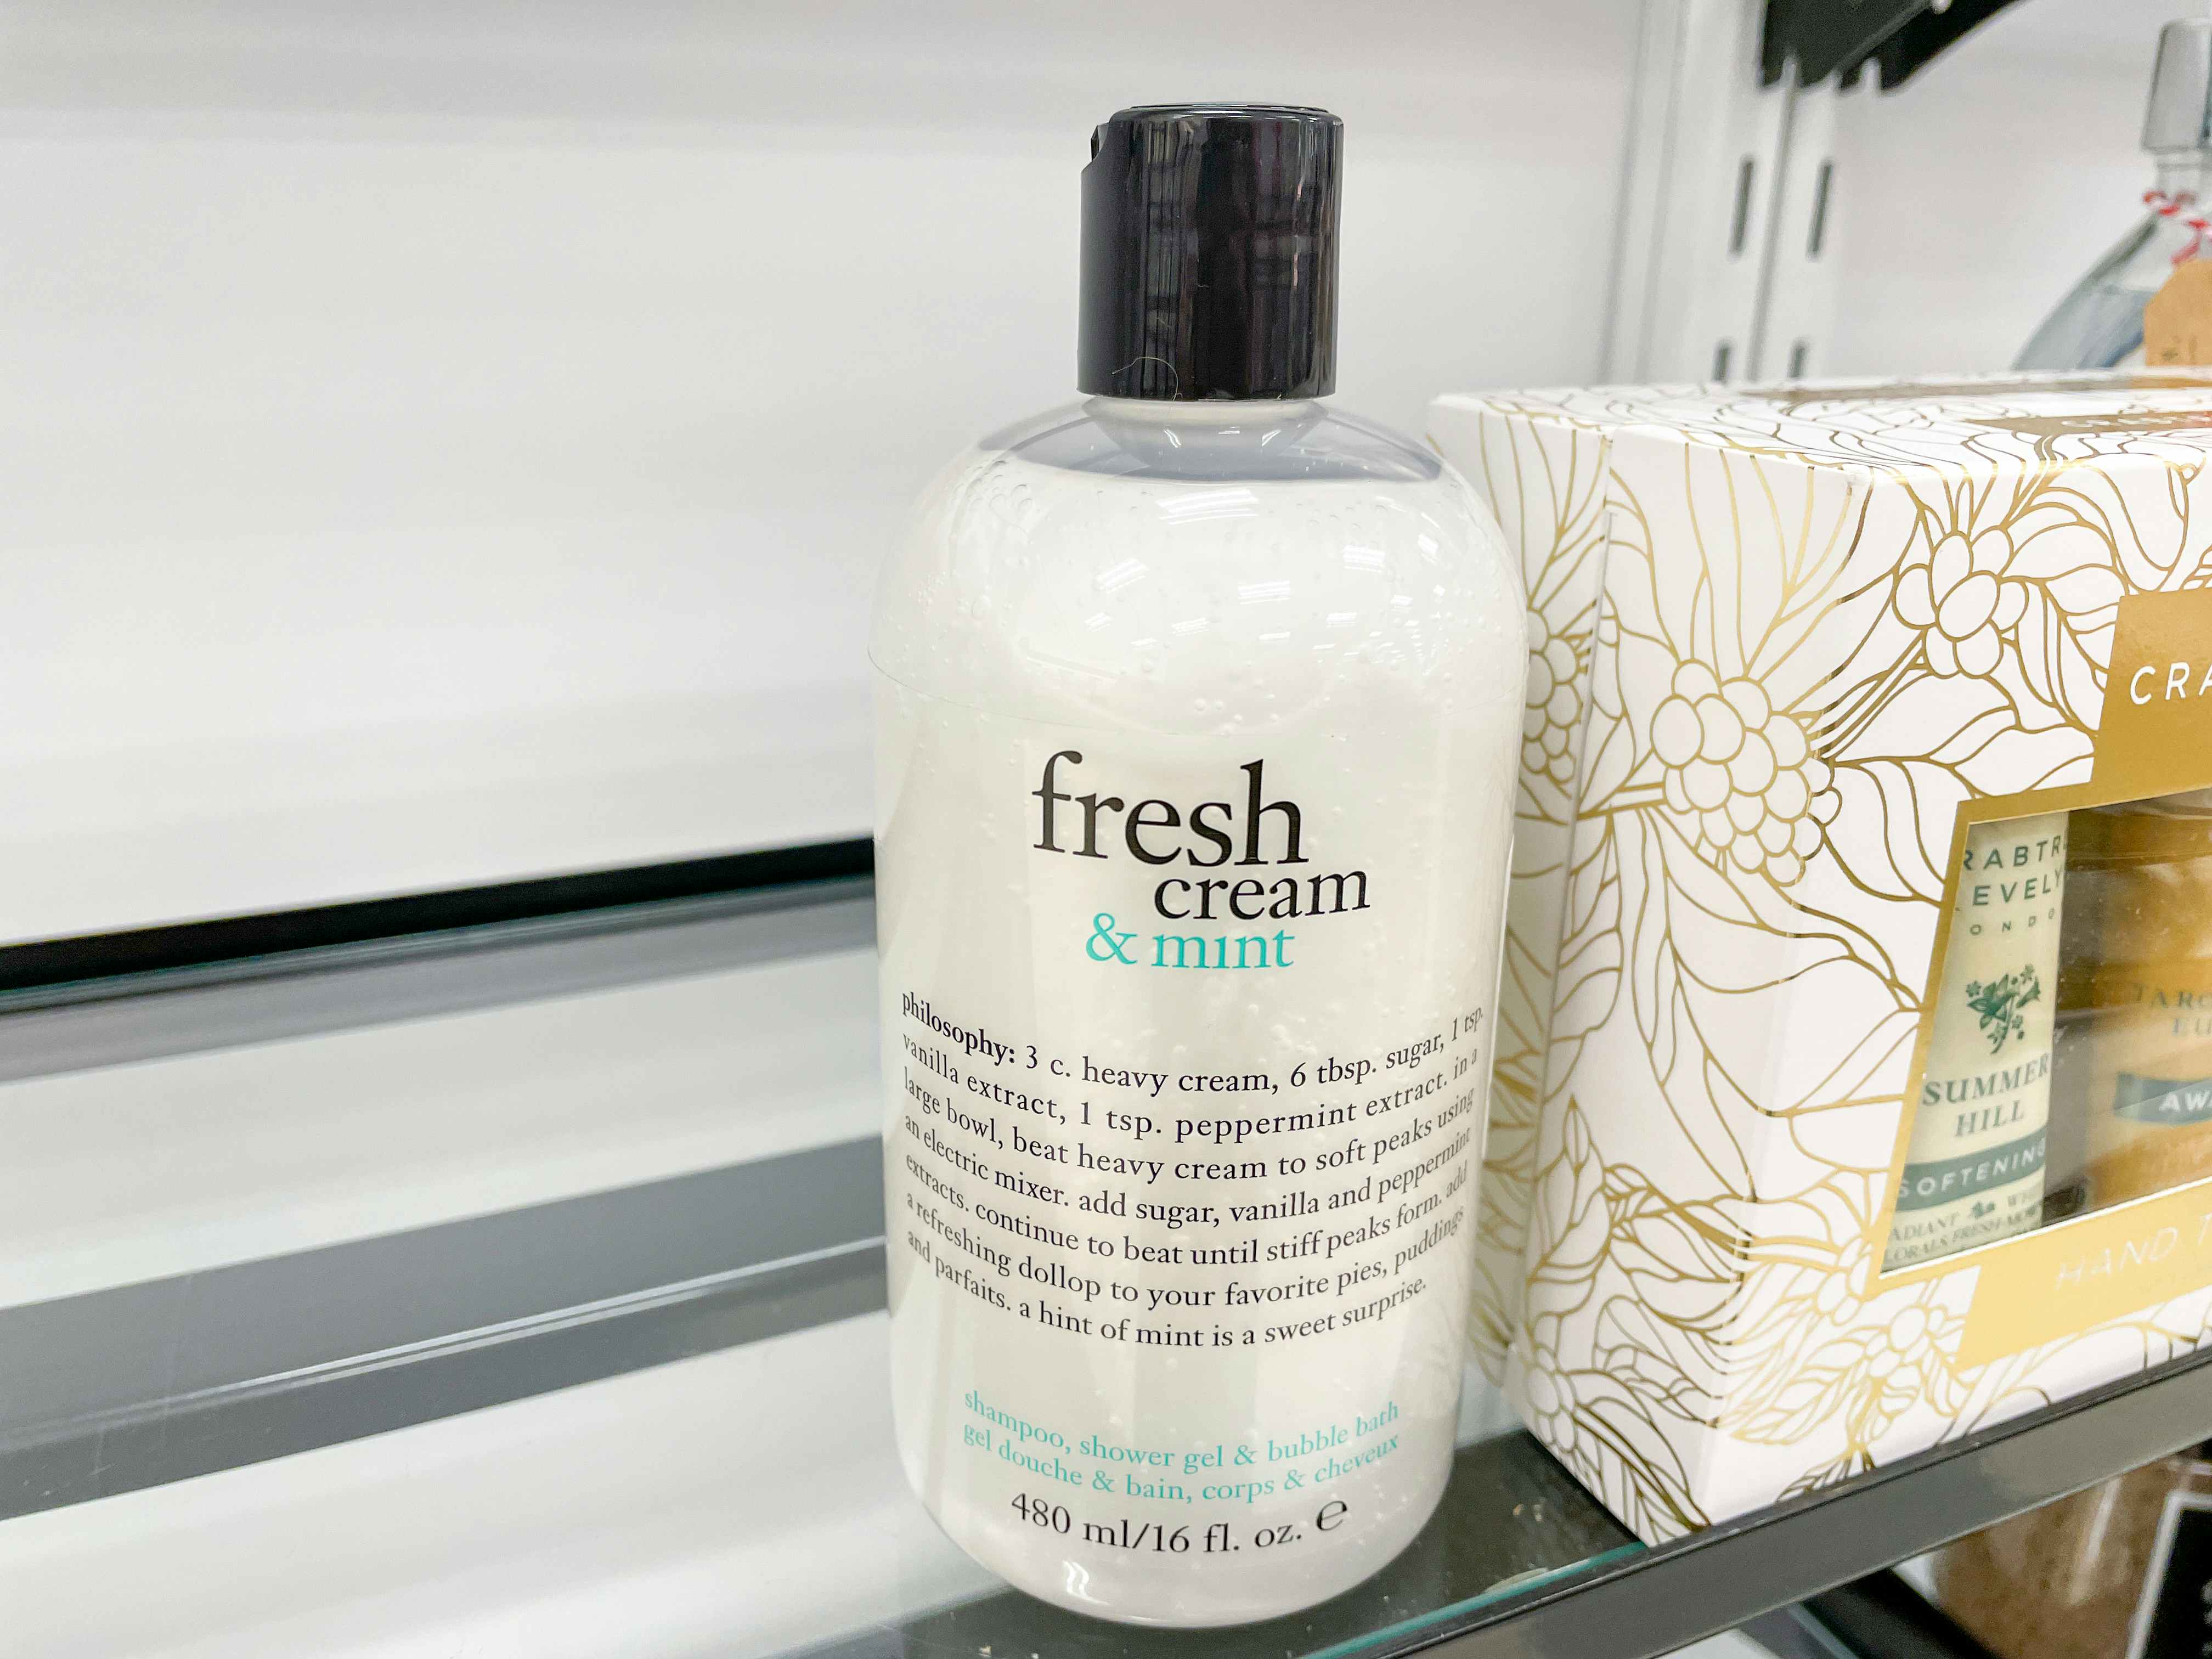 Philosophy fresh cream and mint shampoo, shower gel, and bubble bath on a shelf at tjmaxx